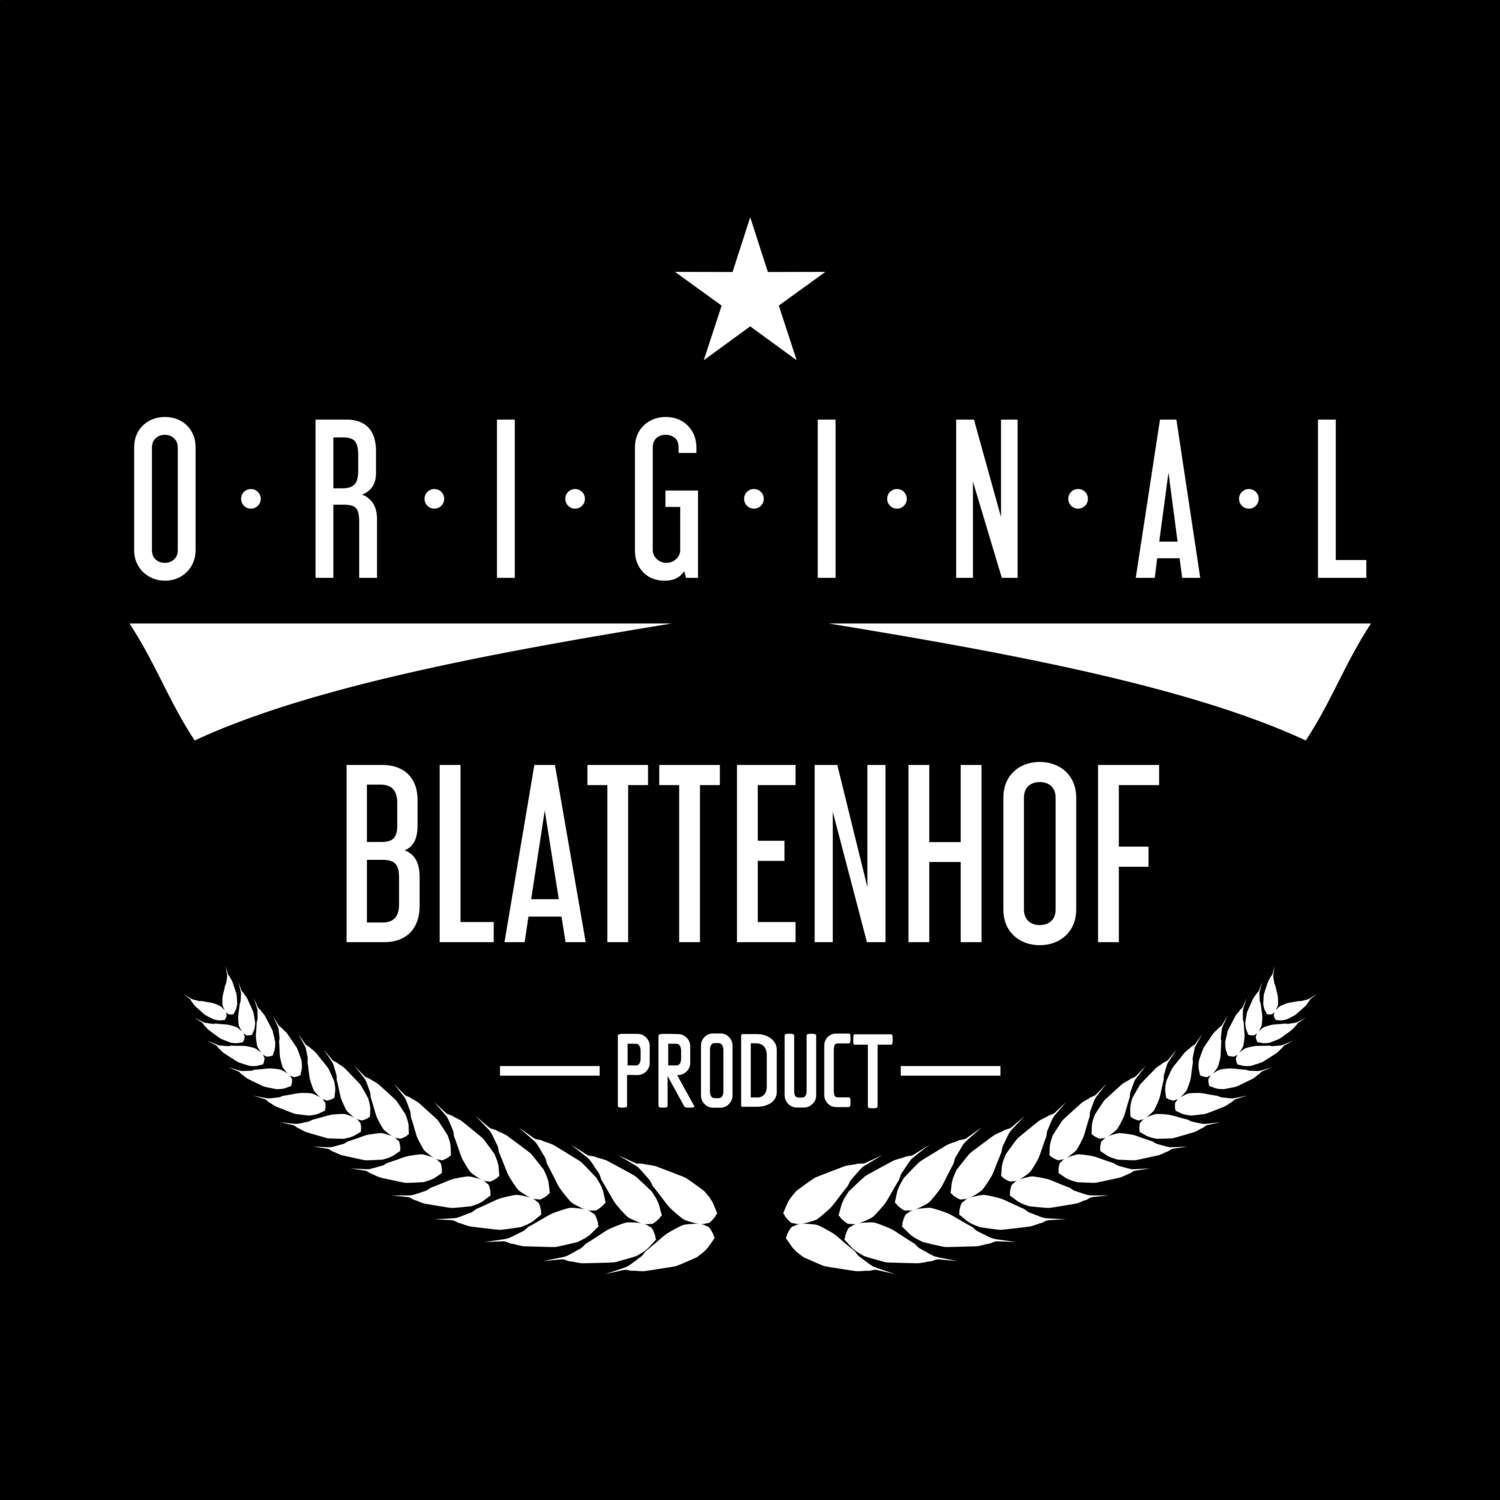 Blattenhof T-Shirt »Original Product«